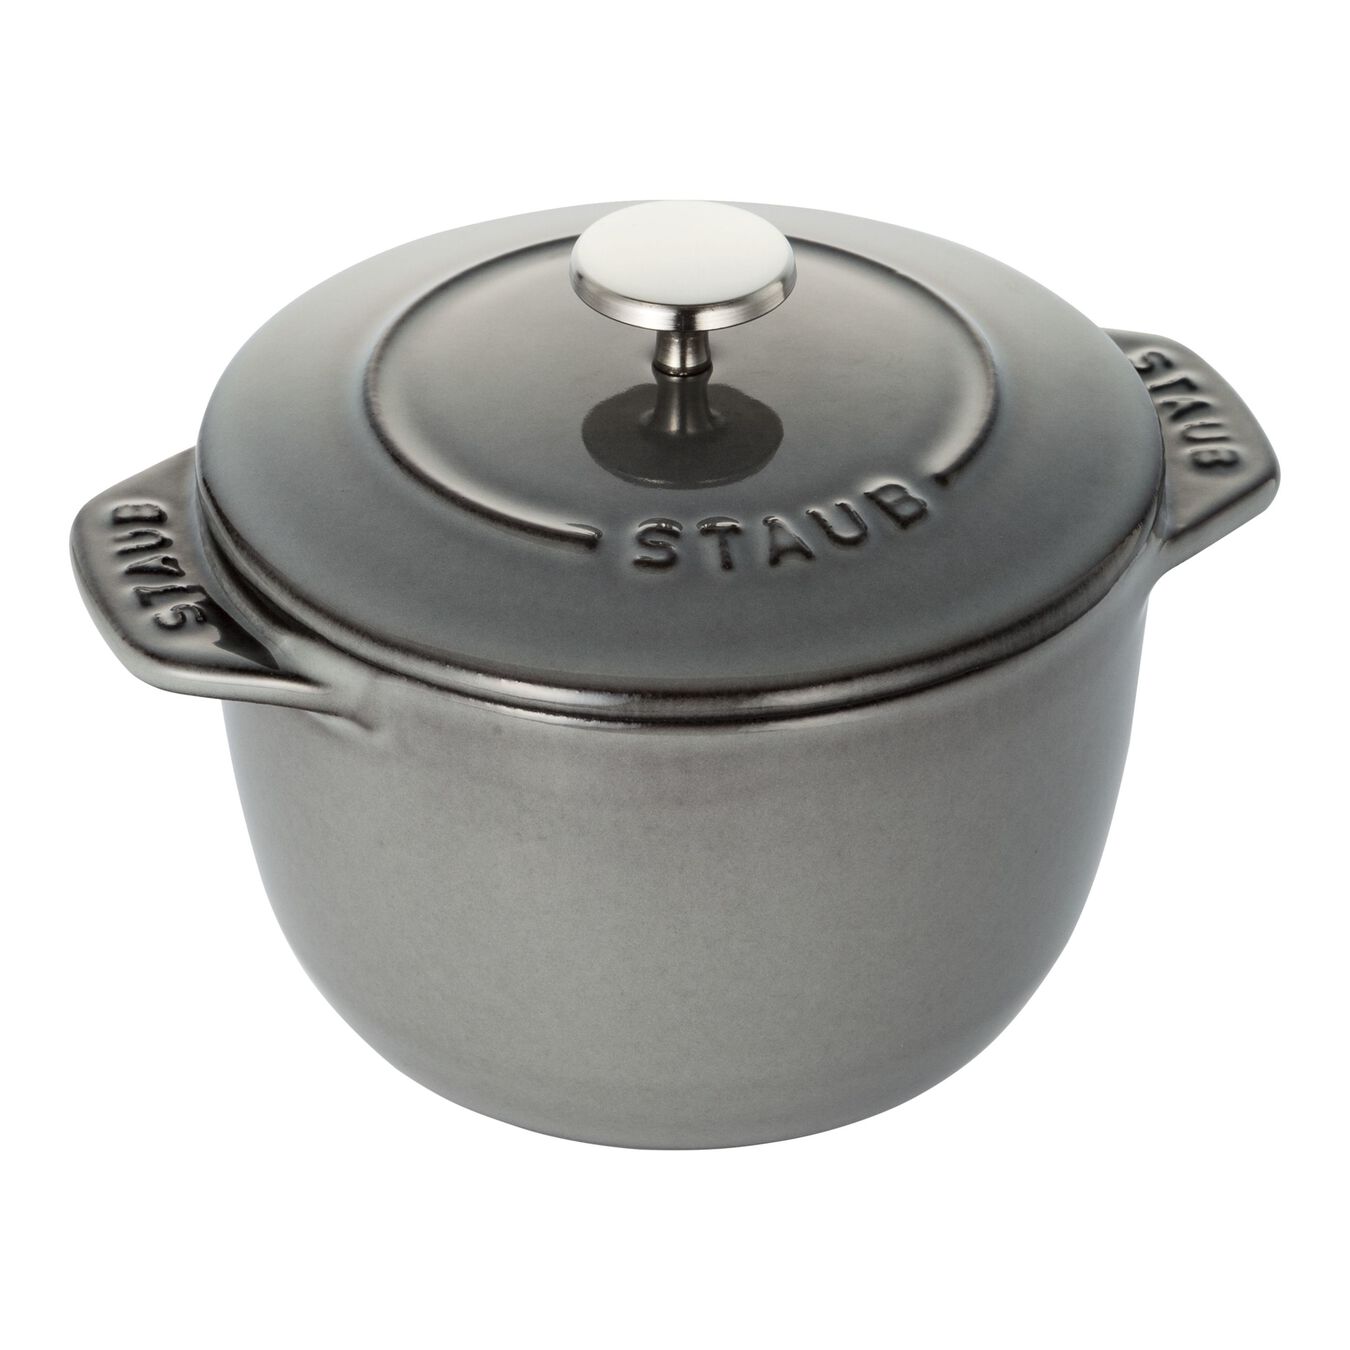 12 cm round Cast iron Rice Cocotte graphite-grey,,large 1